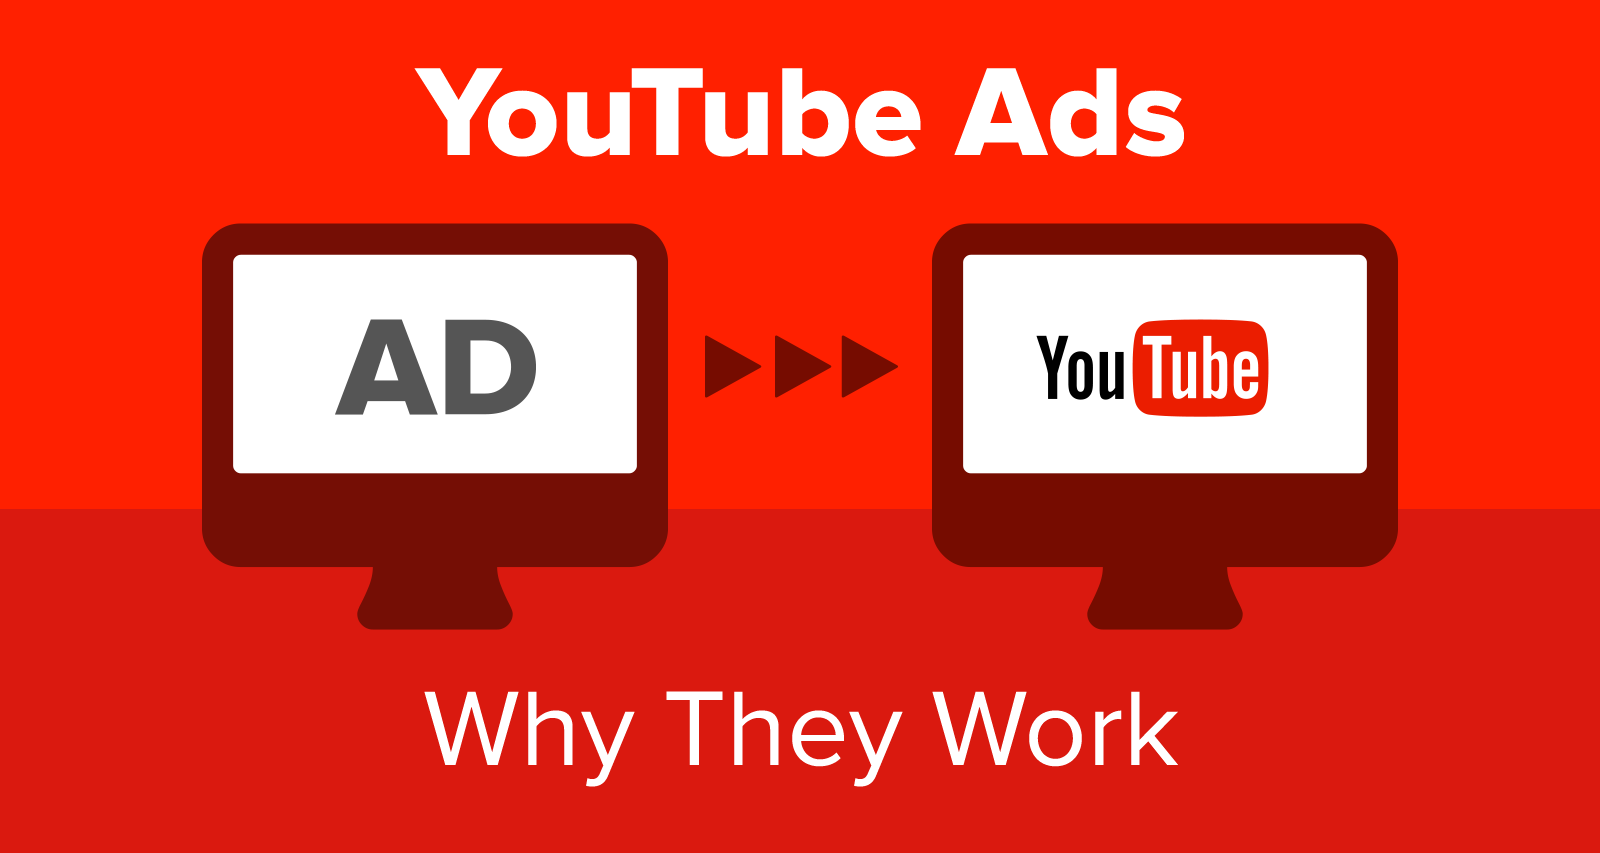 Ютуб youtube реклама. Youtube ads. Youtube advertising. Ads для ютуба. Реклама в видеороликах на youtube это.